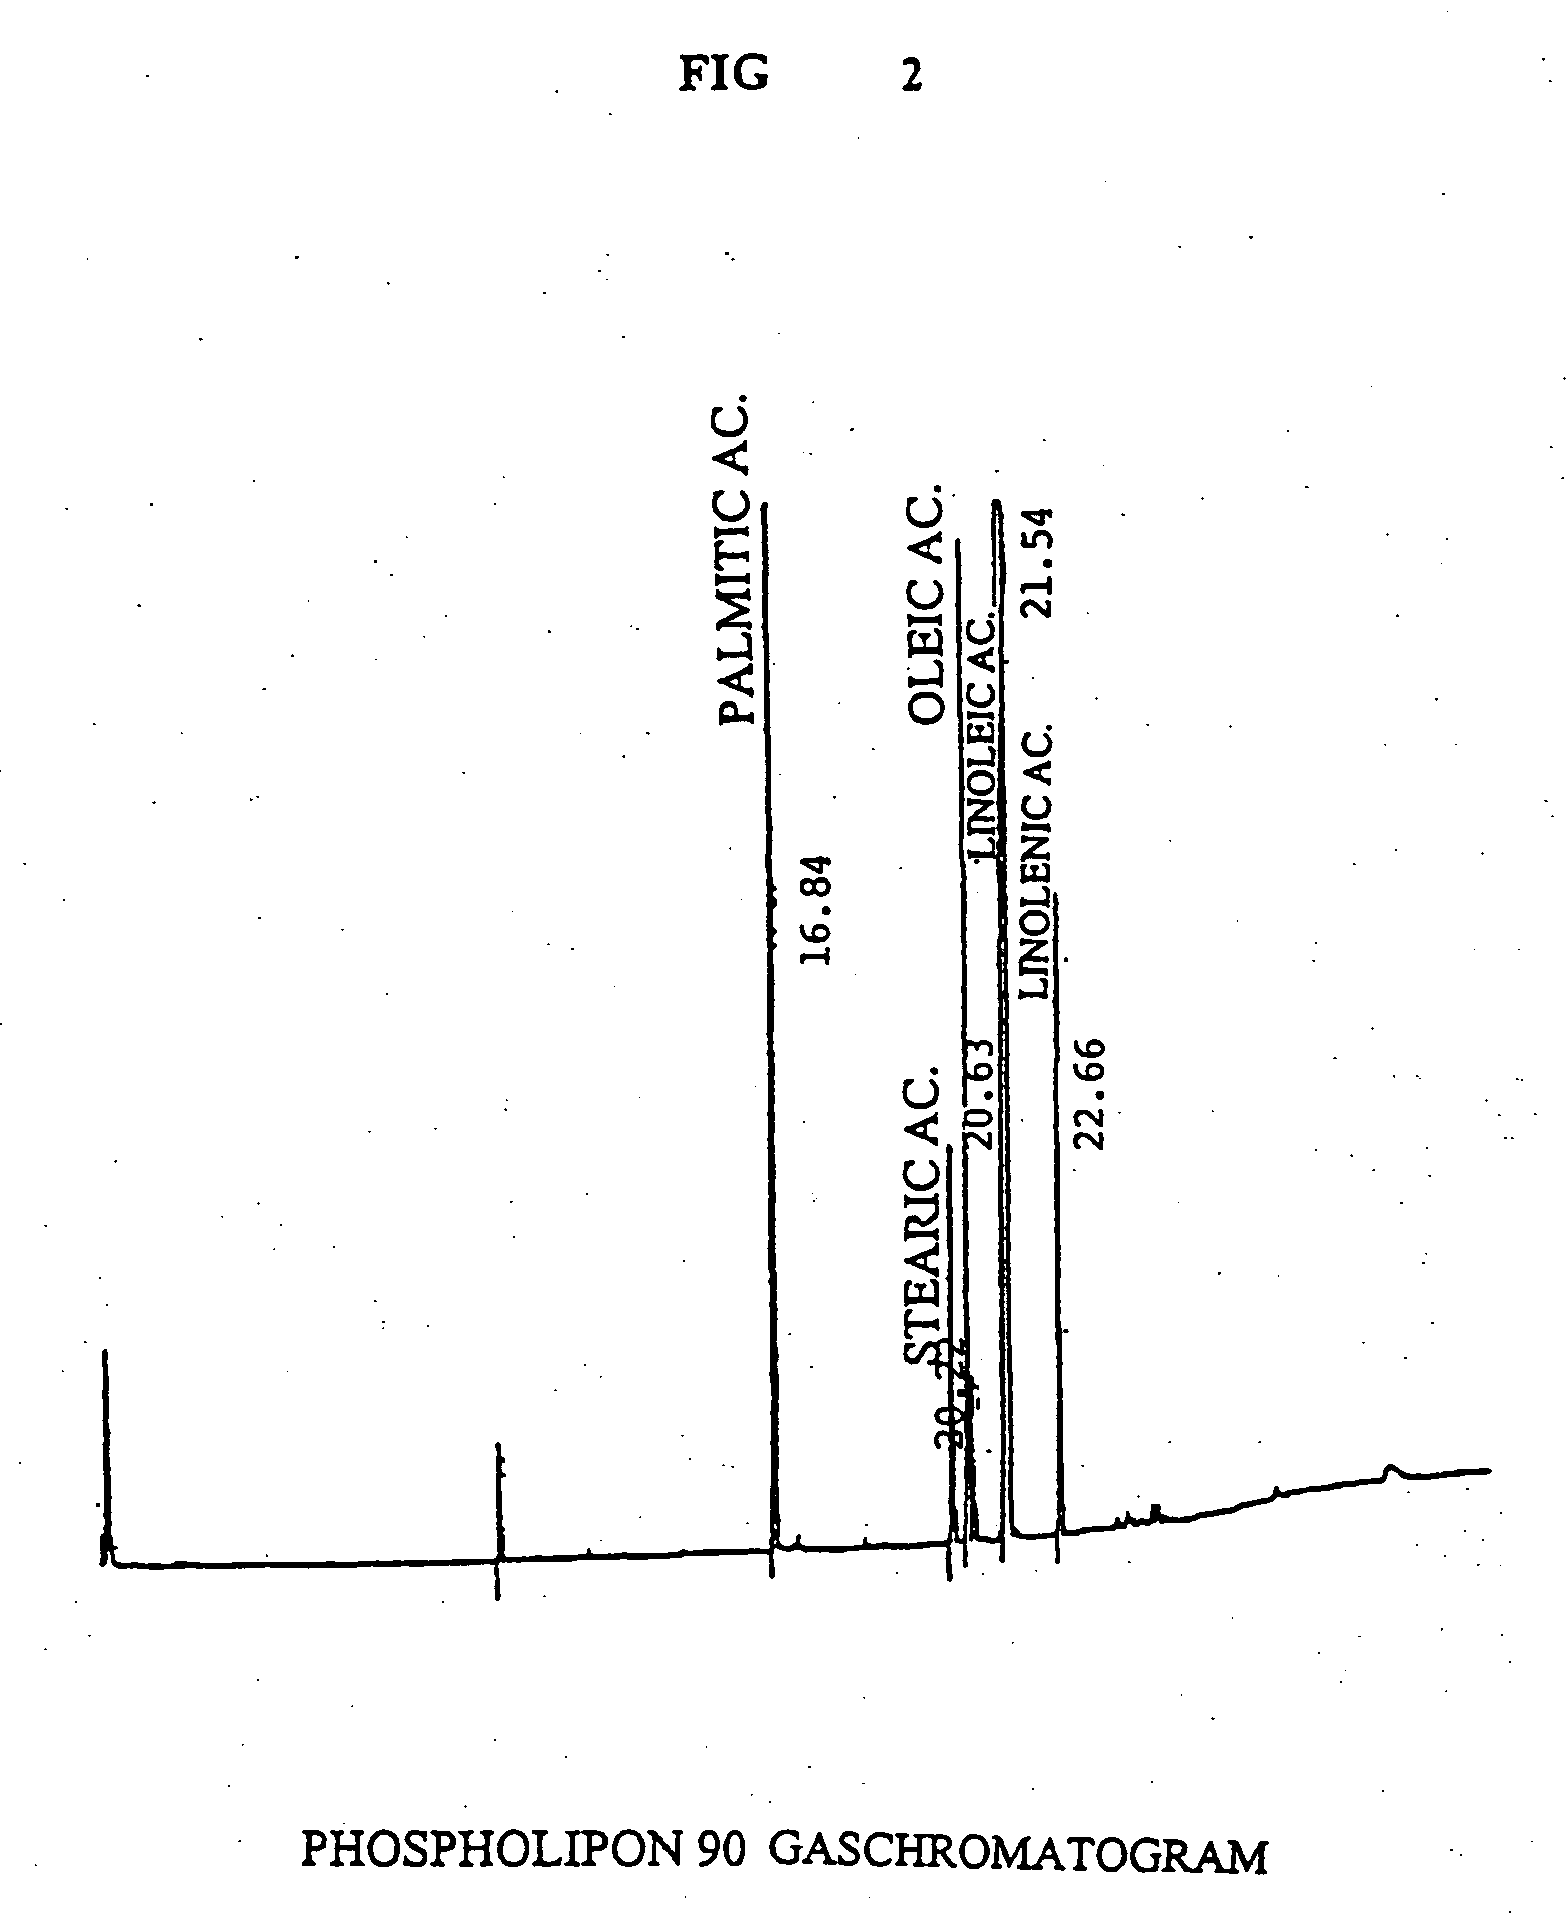 Liposome formulation of 6,9-bis[(2-aminoethyl)-amino]benzo[g]isoquinoline-5, 10-dione dimaleate